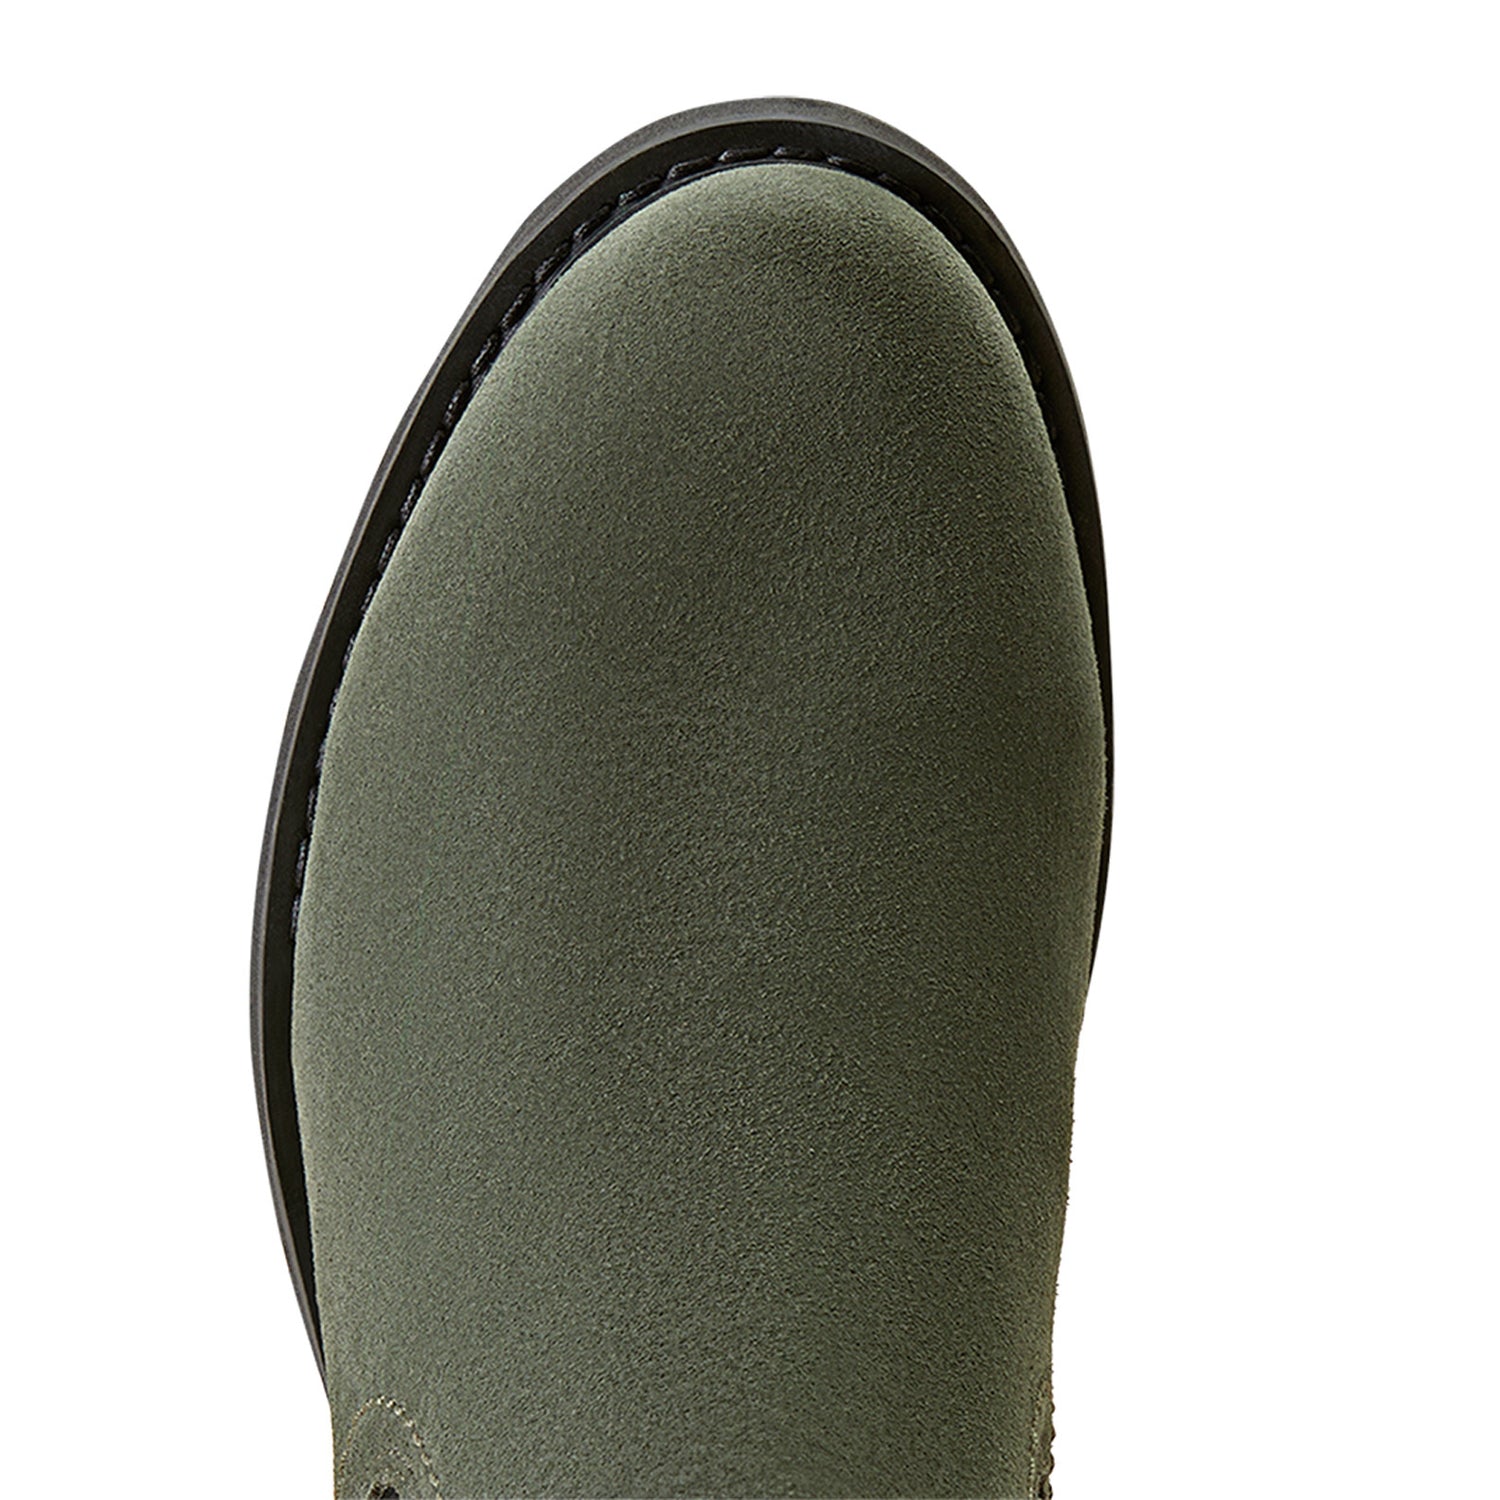 Ariat Wexford Lug Waterproof Chelsea Boots